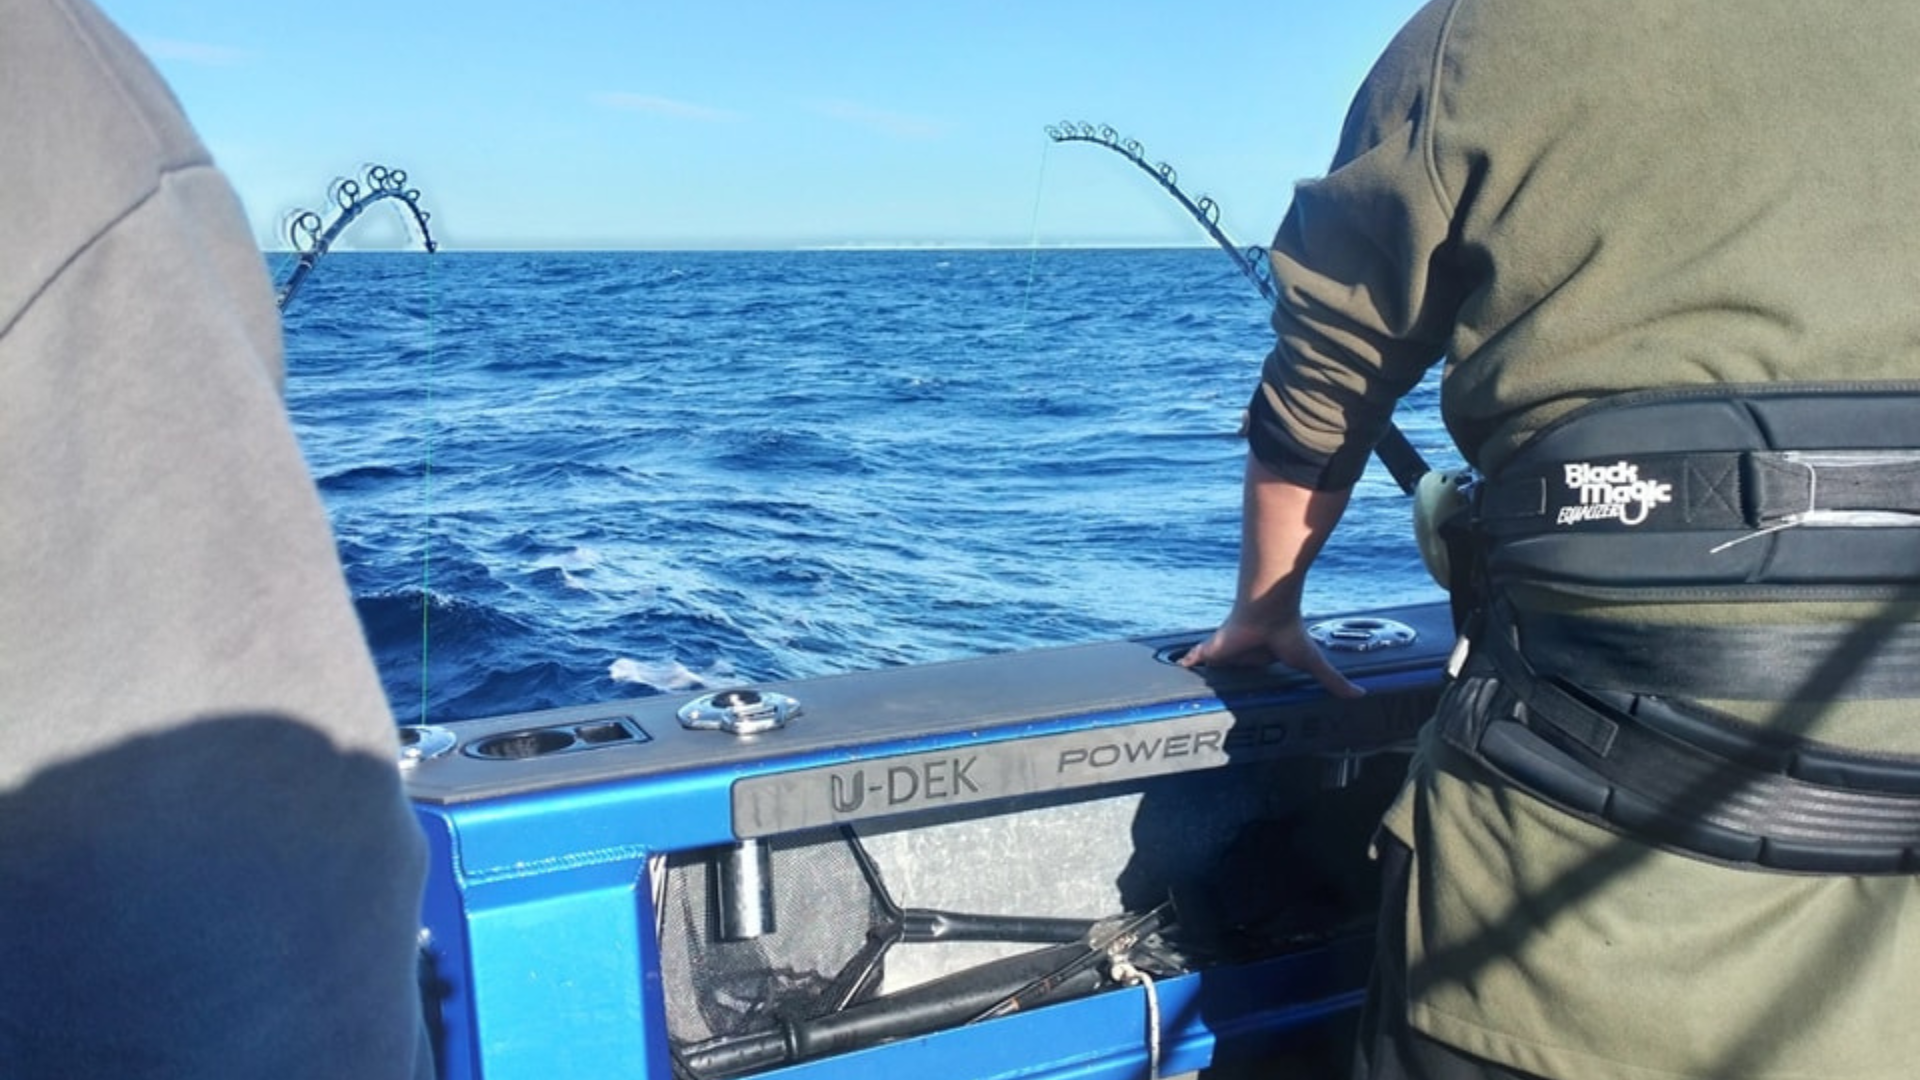 14 Bluefin Tuna in 2 days of fishing! - Whitiangler